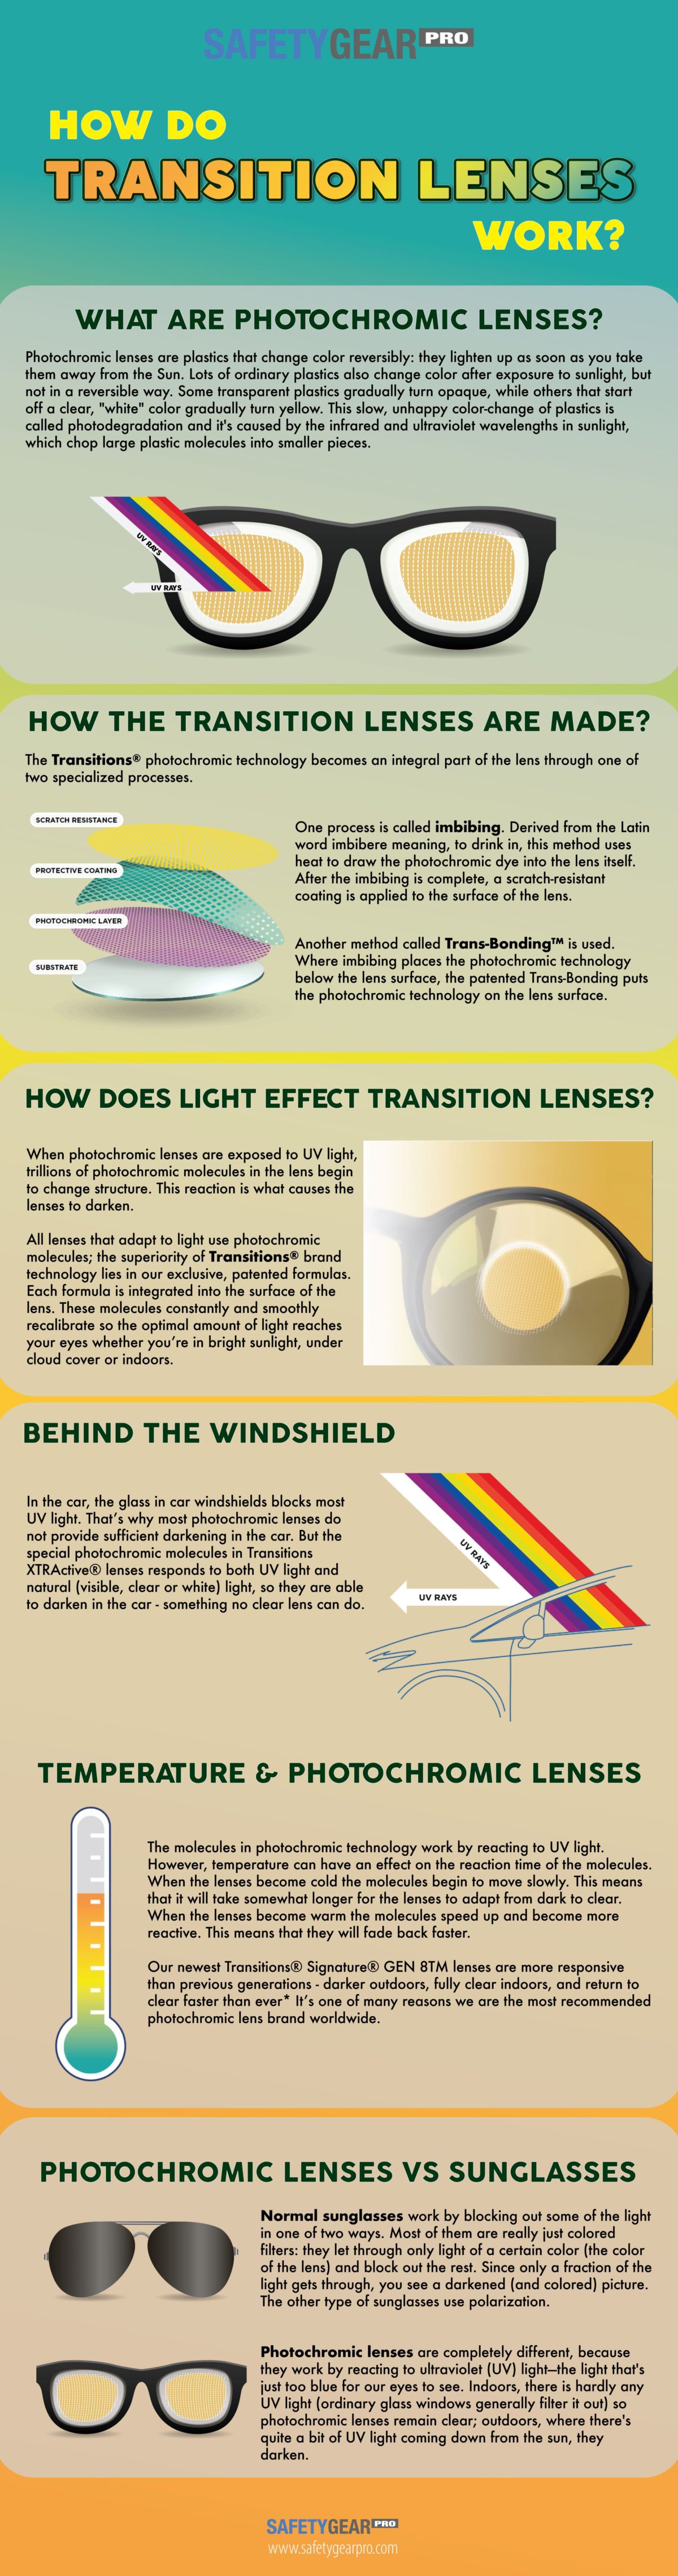 How Do Transition Lenses Work? Infographic